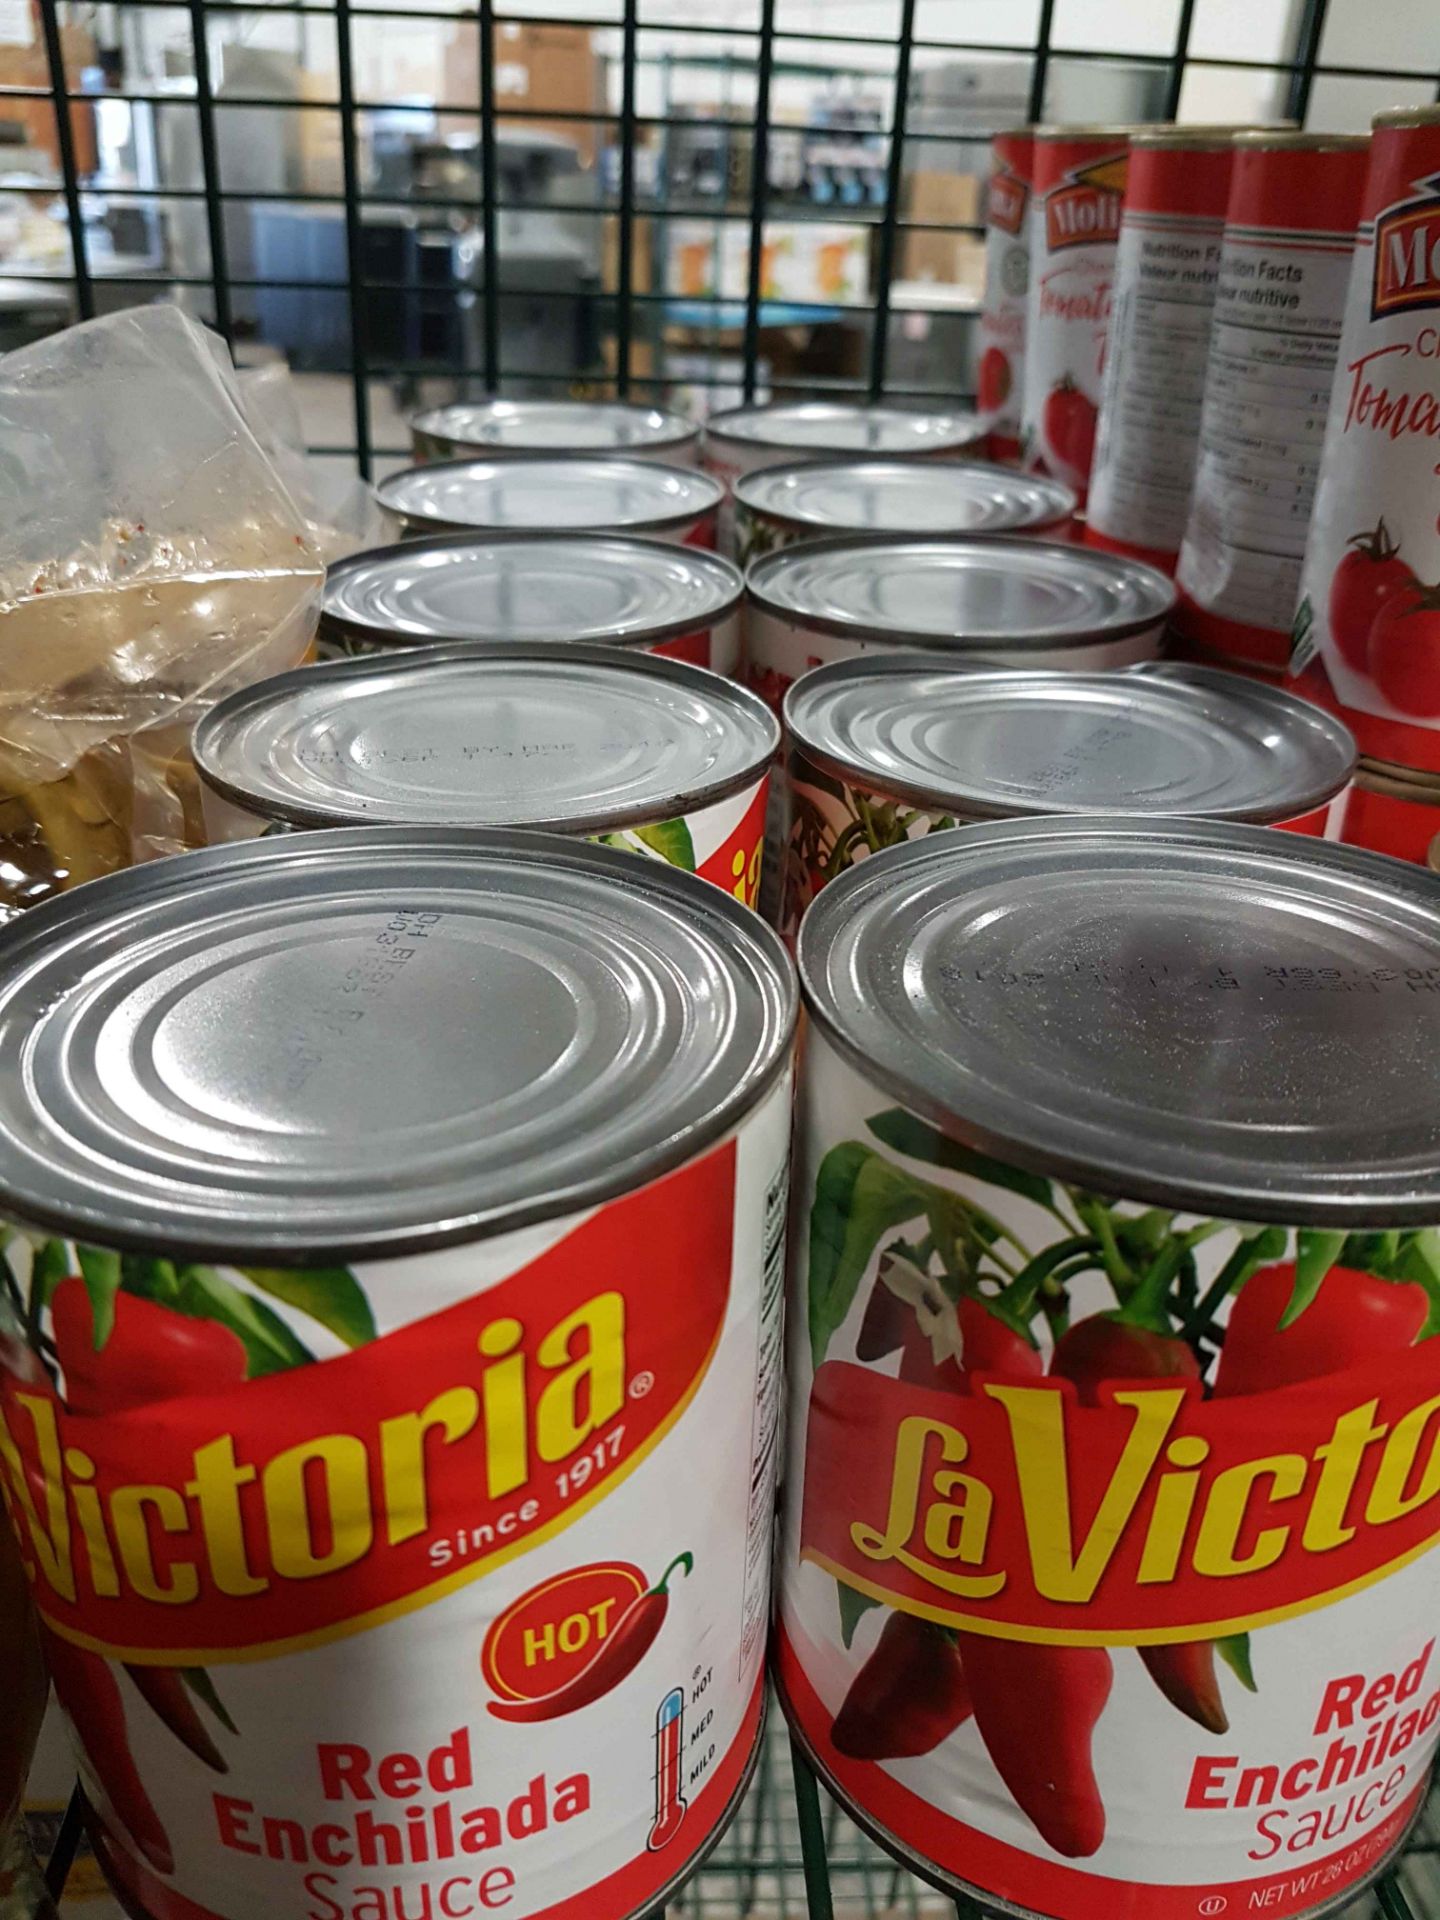 La Victoria Red Enchilada Sauce - 10 x 794GR Cans - Image 2 of 2